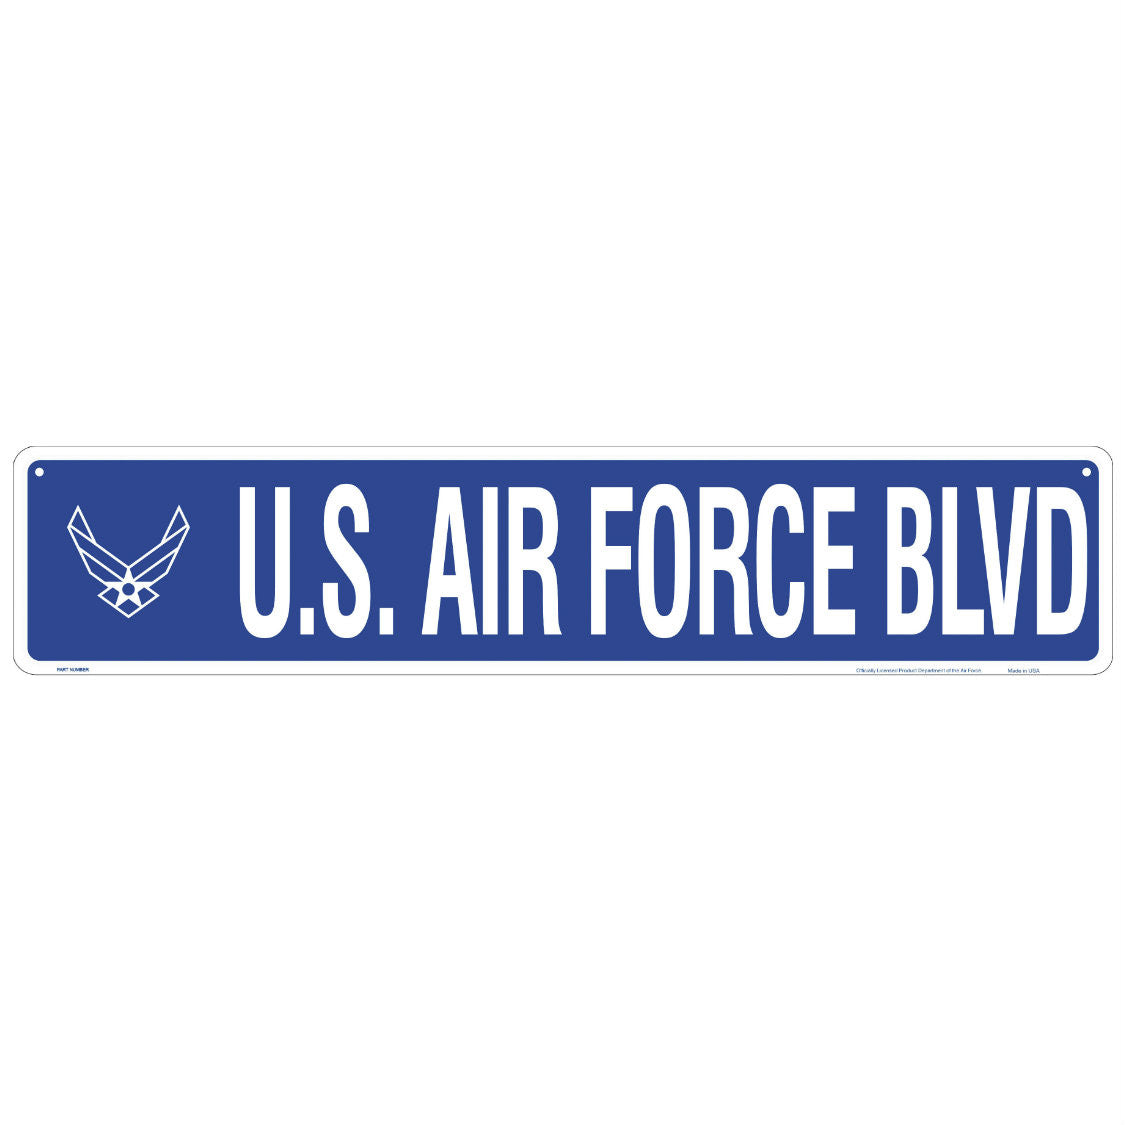 Air Force Blvd Metal Street Sign